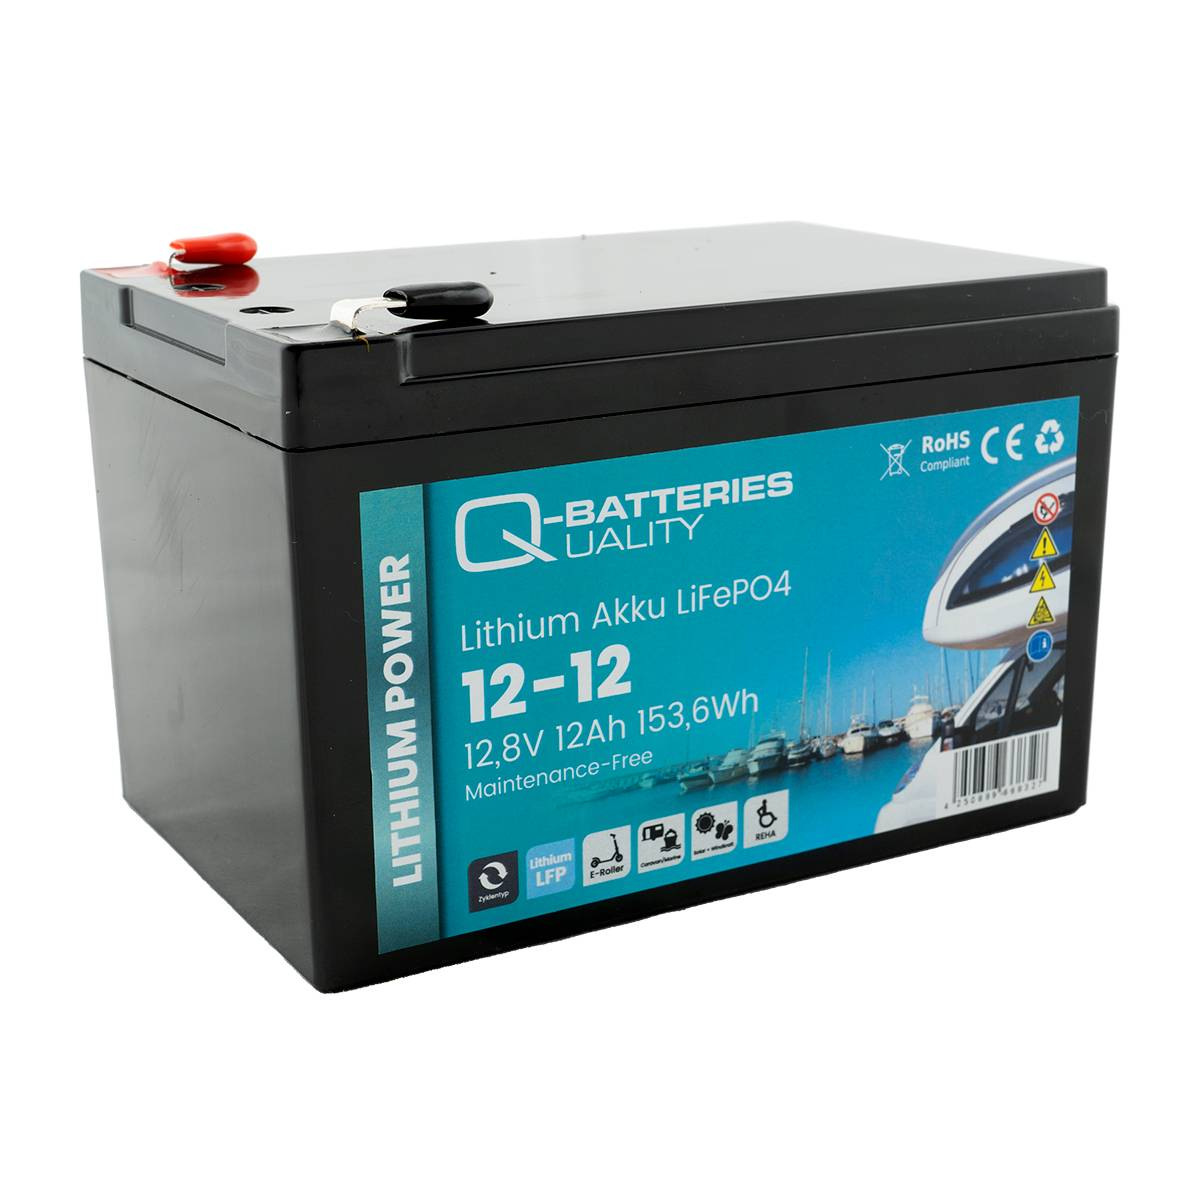 Lithium Batterie 60Ah 5,4kg, 336,00 €